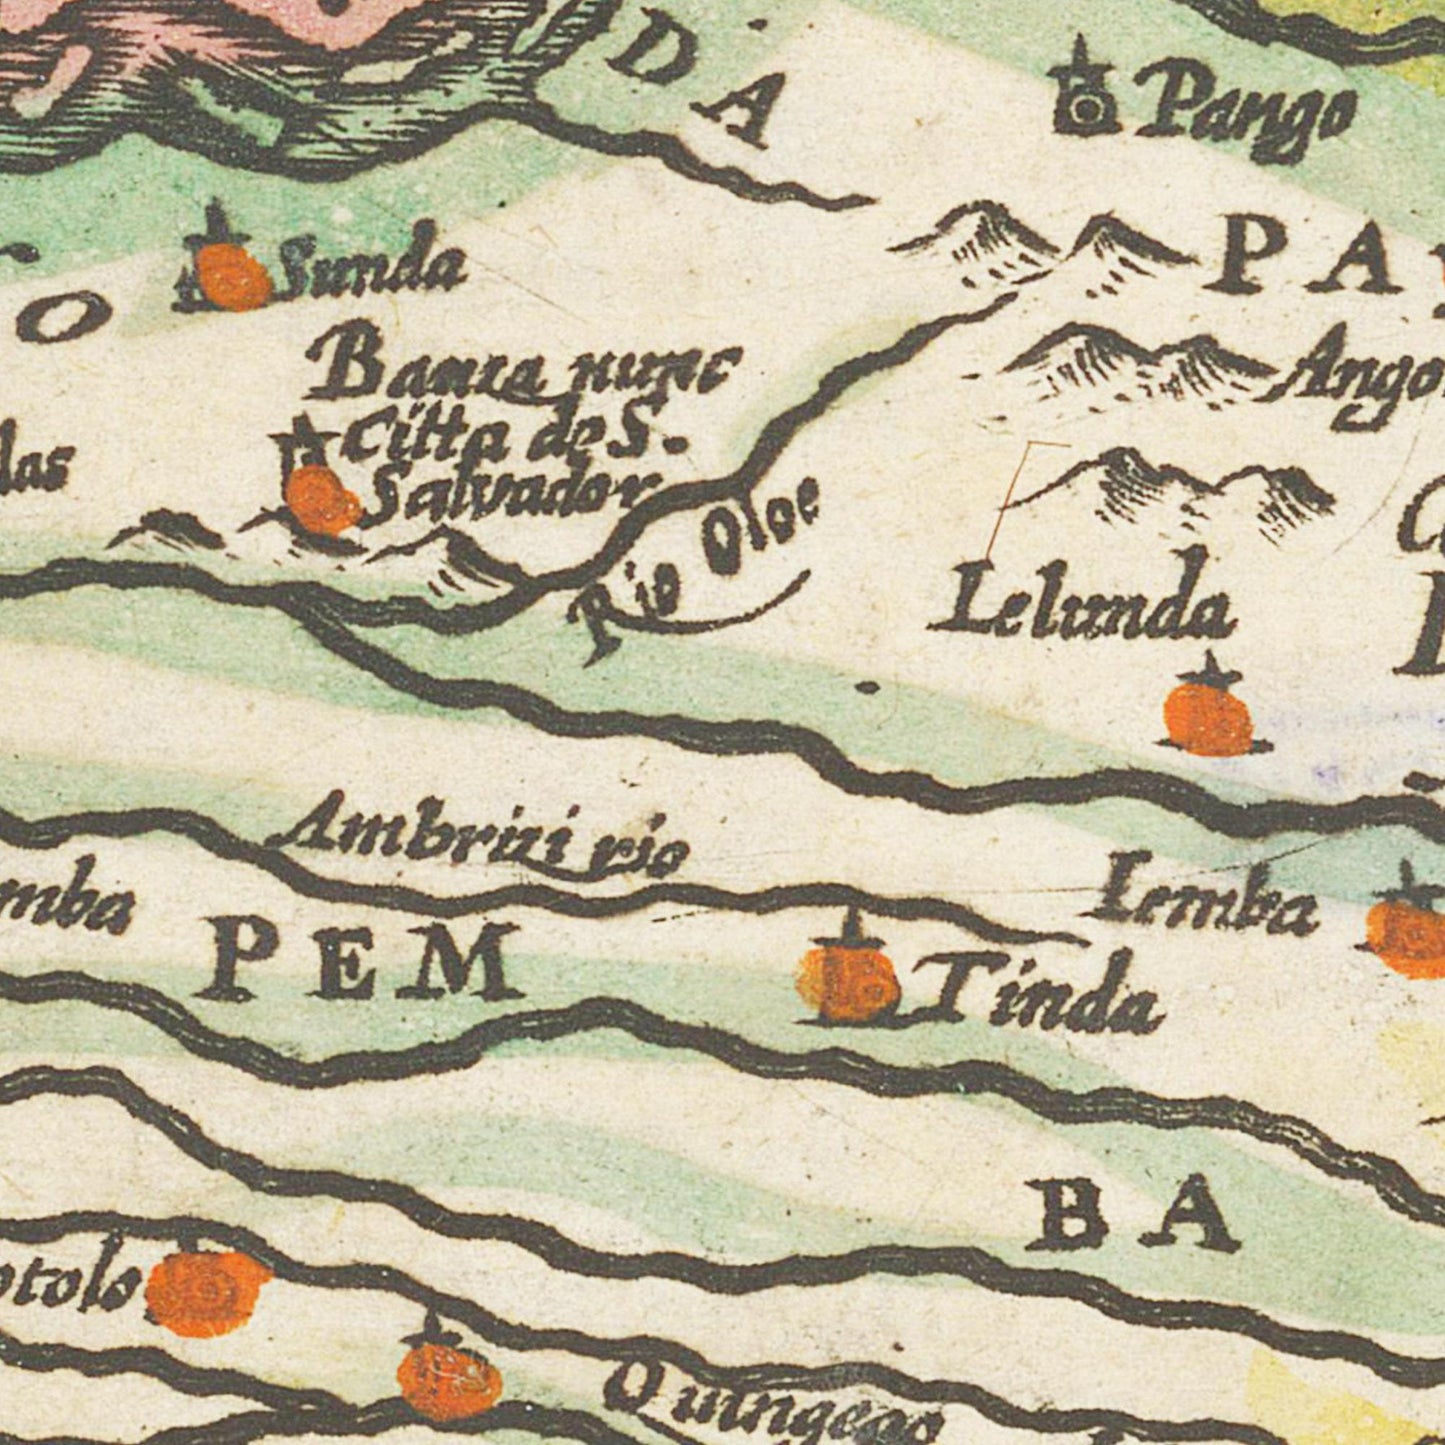 Historische Landkarte Kongo um 1609